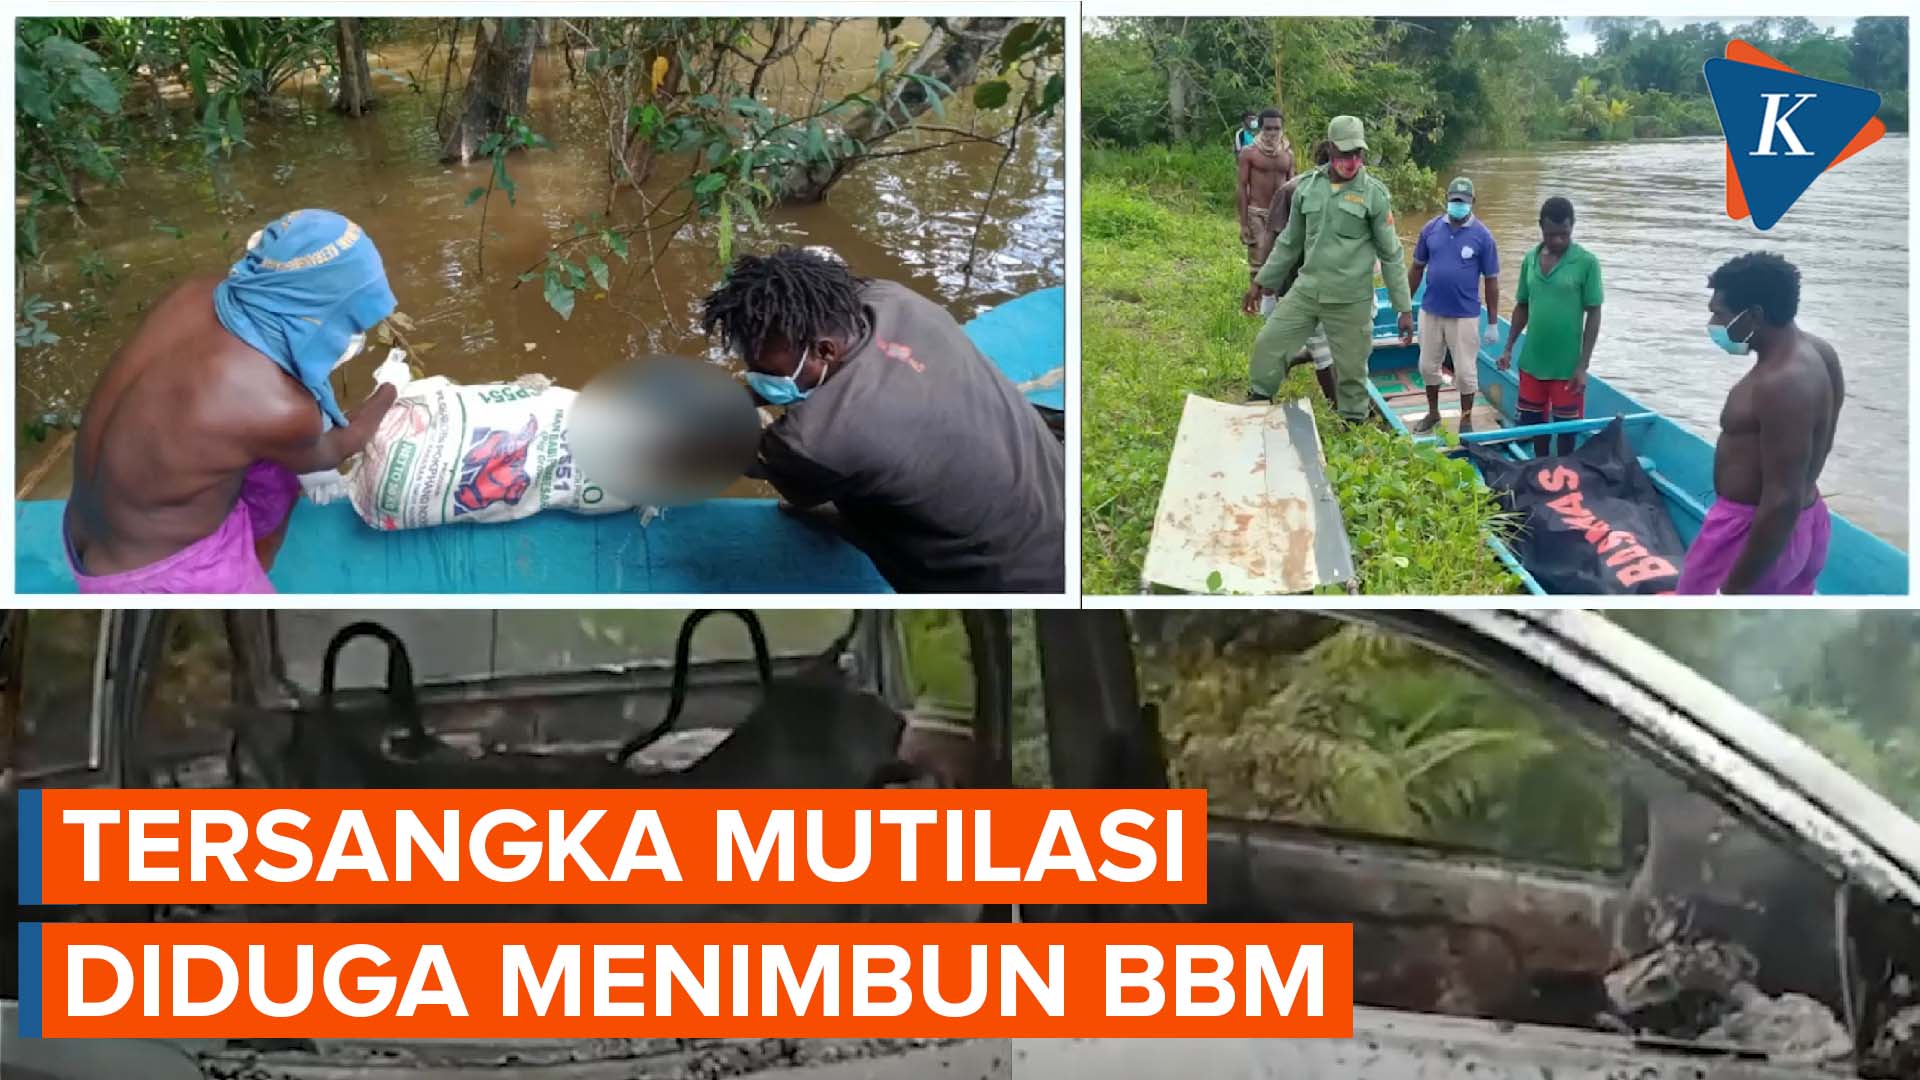 Prajurit TNI Tersangka Mutilasi di Mimika Diduga Terlibat Penimbunan BBM